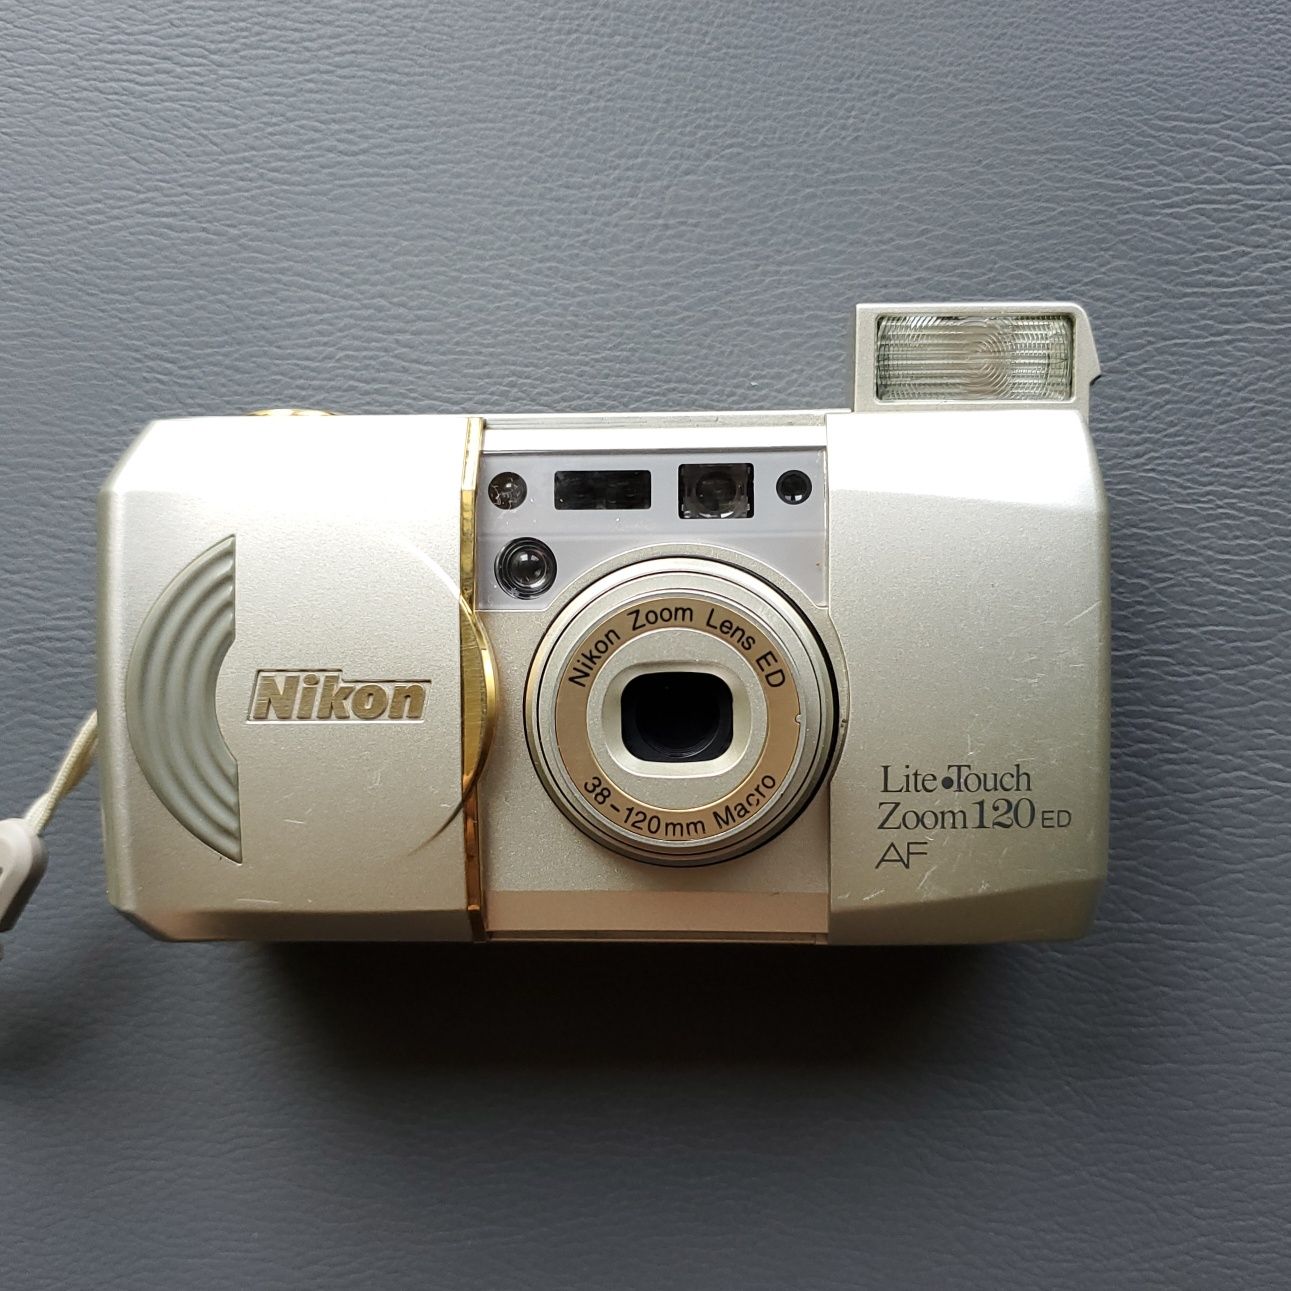 Пленочный компакт фотоаппарат Nikon Lite Touch Zoom 120ED тестирован